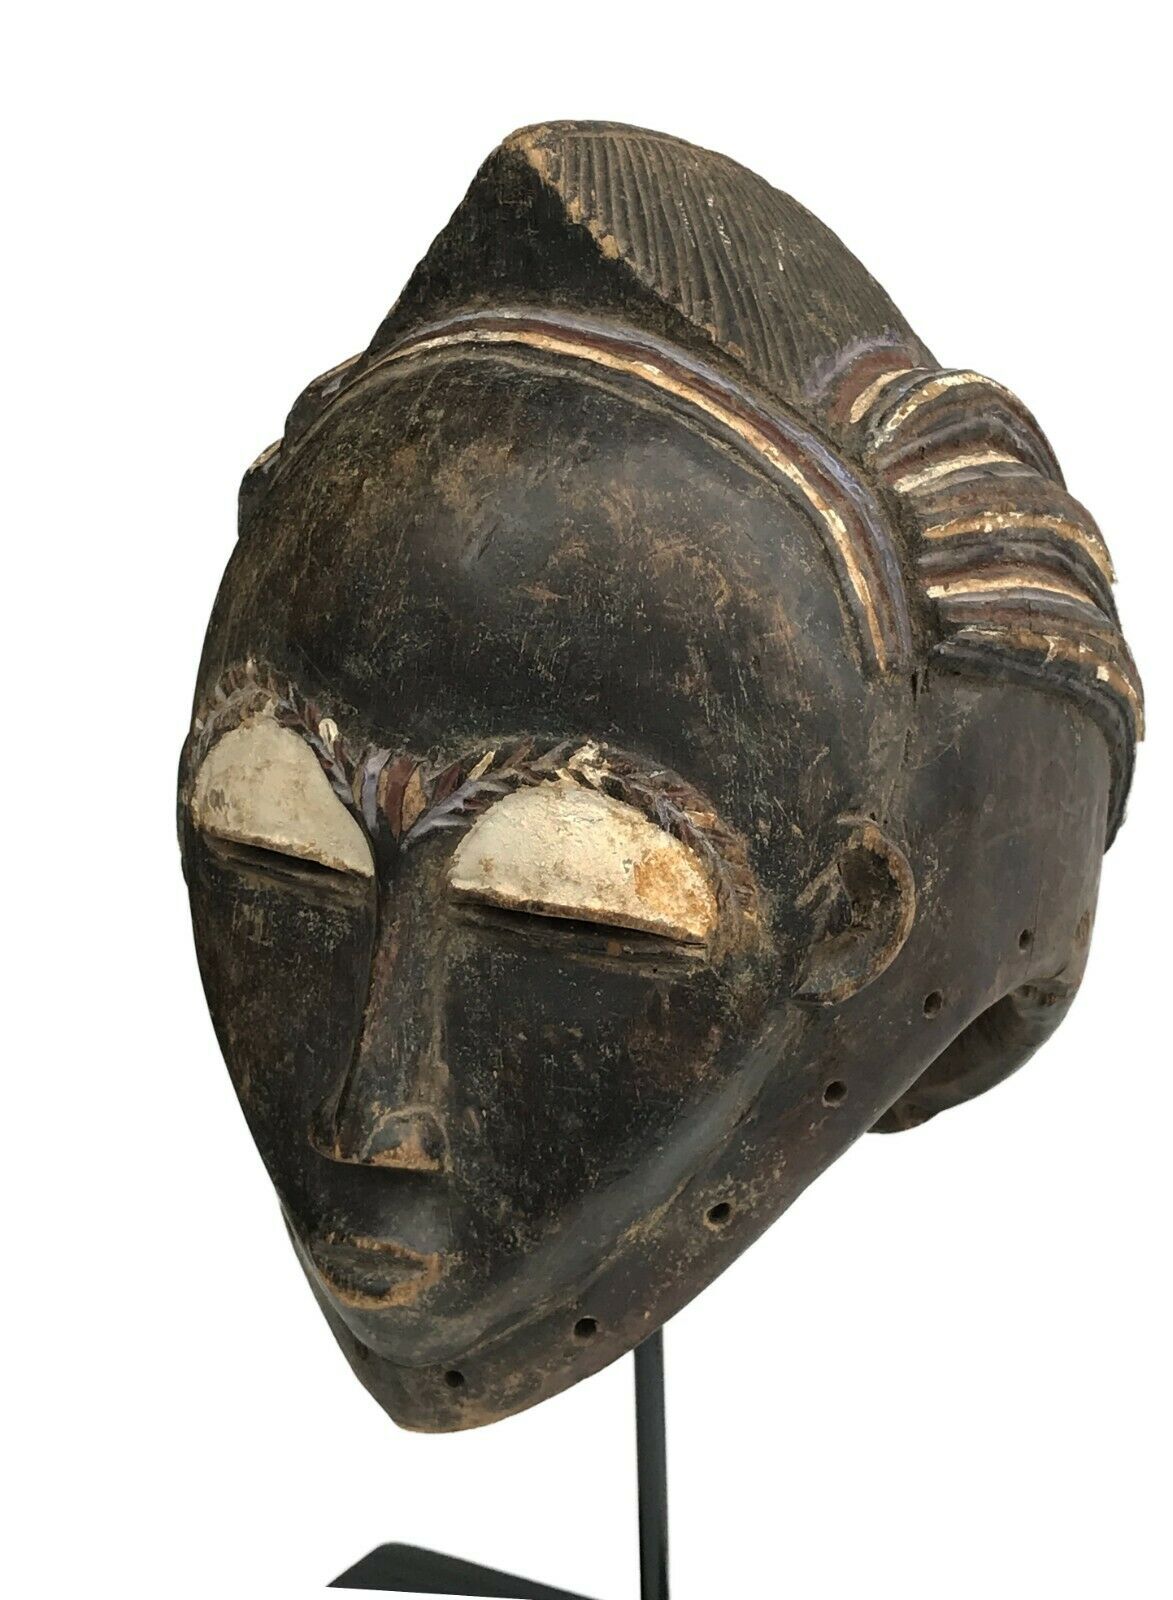 #534 Baule Portrait Hemet Mask Mblo/Kpan  Cote d'Ivoire Africa On Custom Stand 20" H